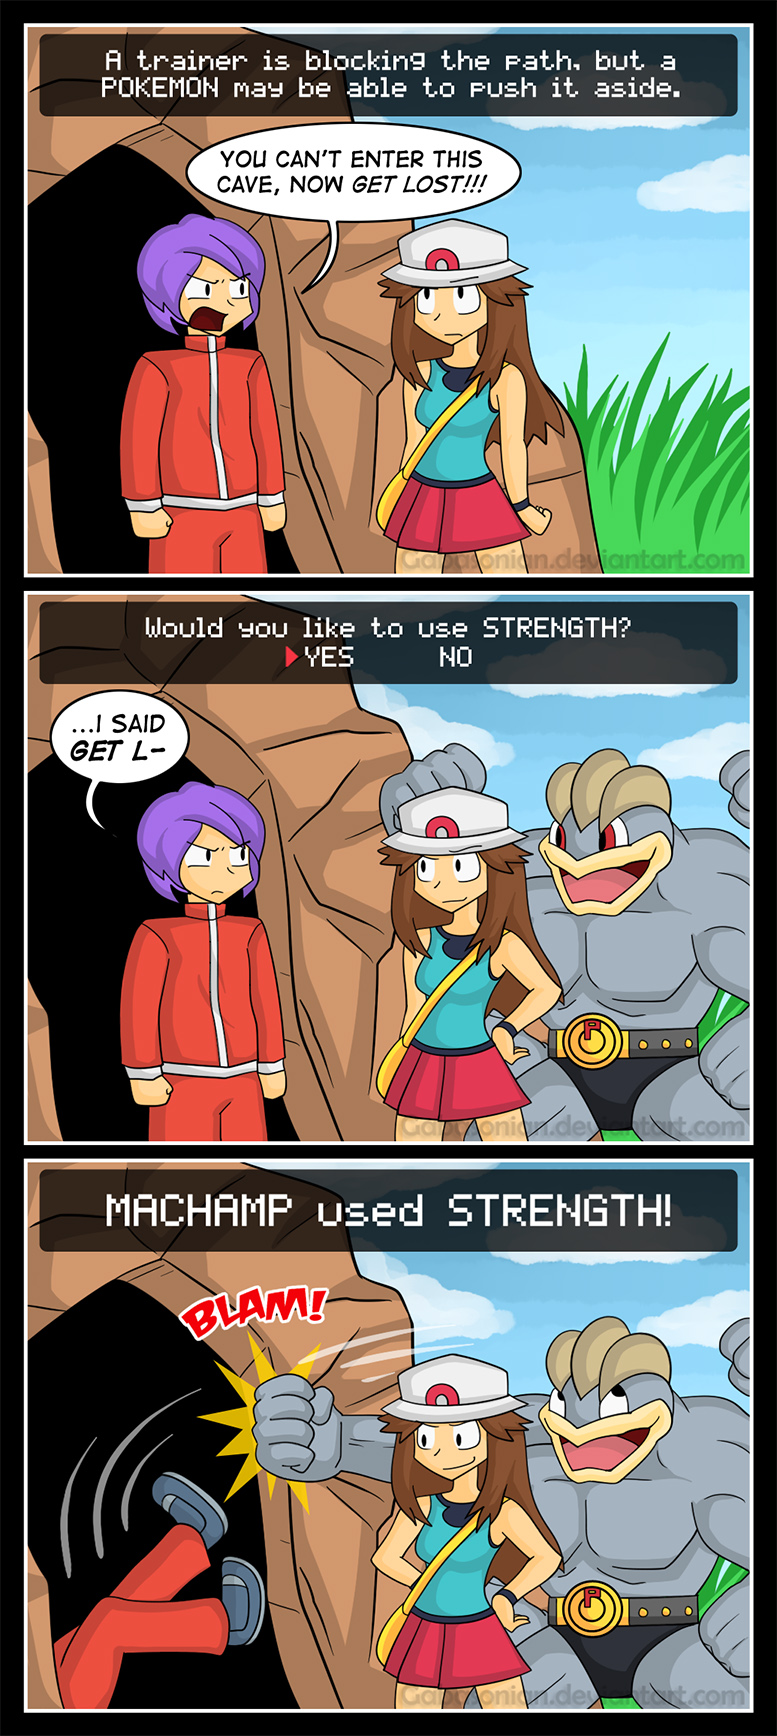 Use Strength!